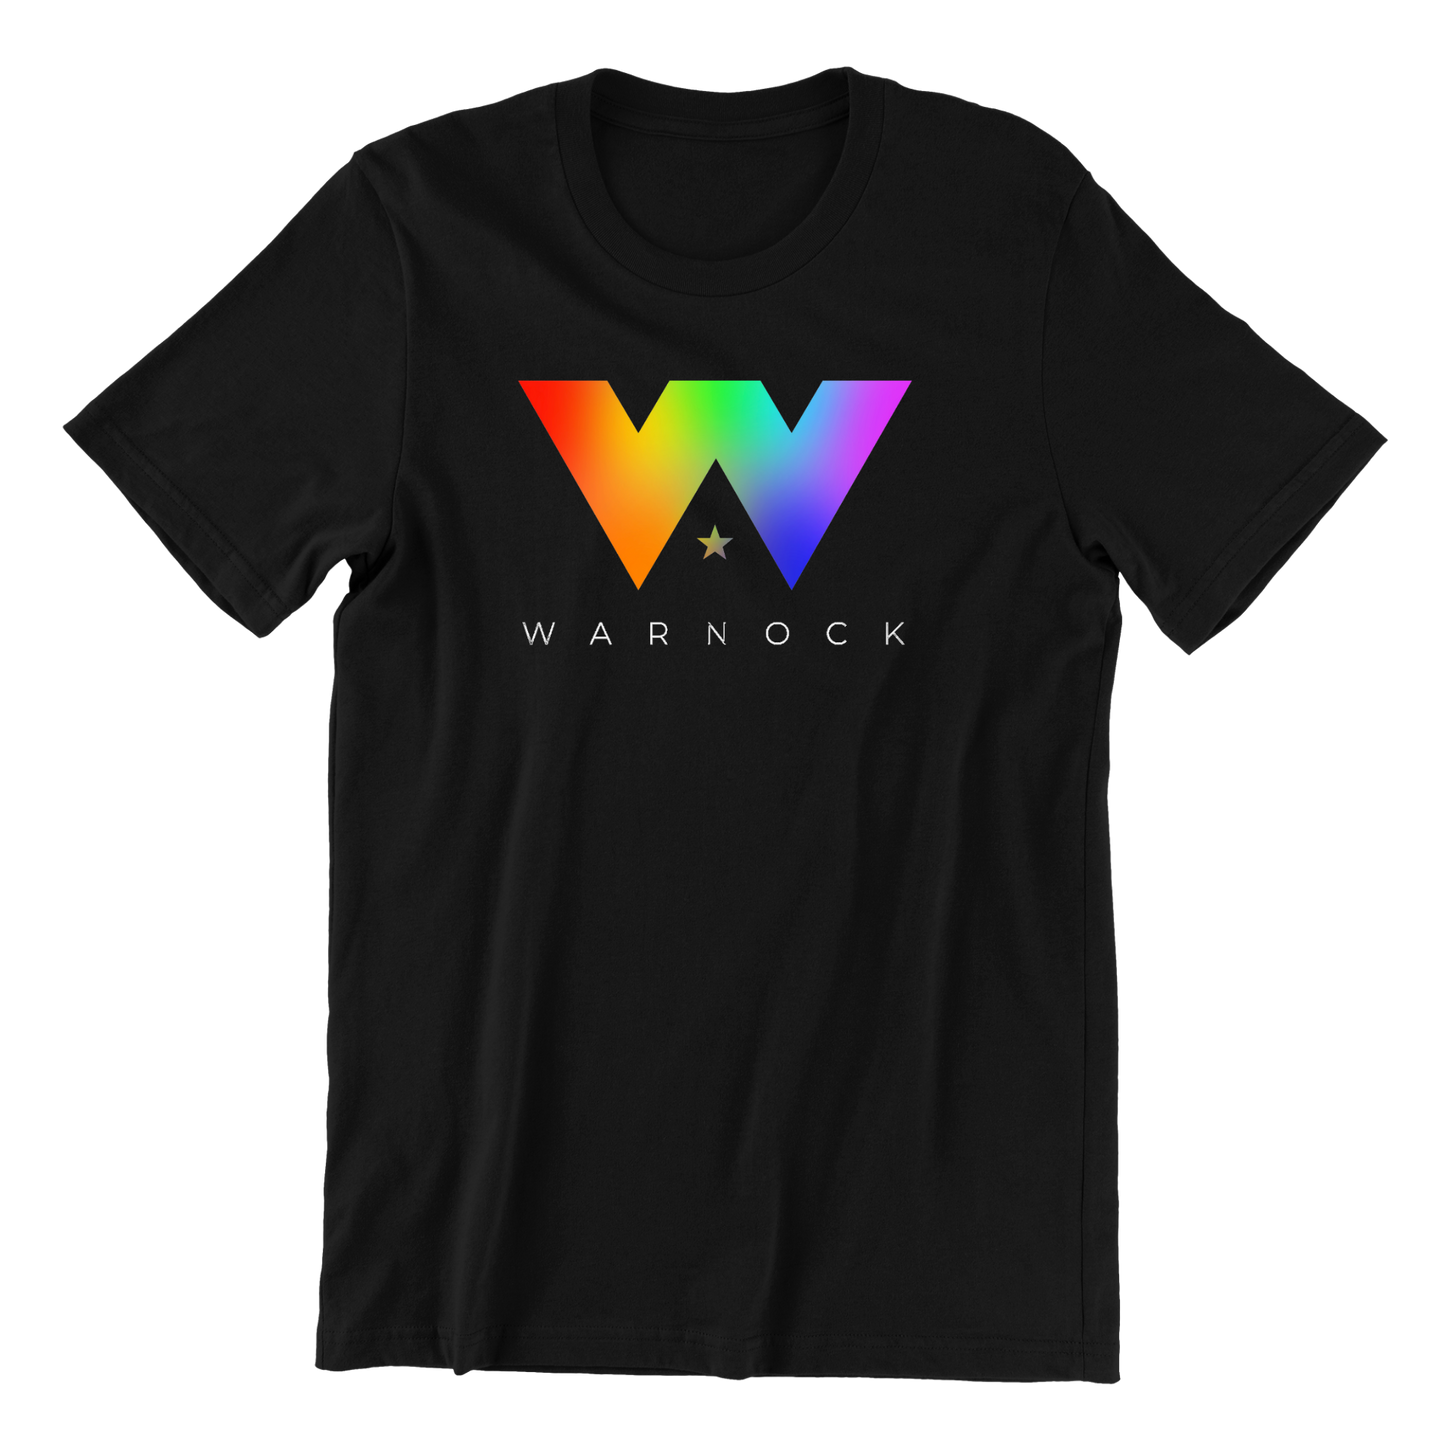 Warnock 'W' Pride T-Shirt